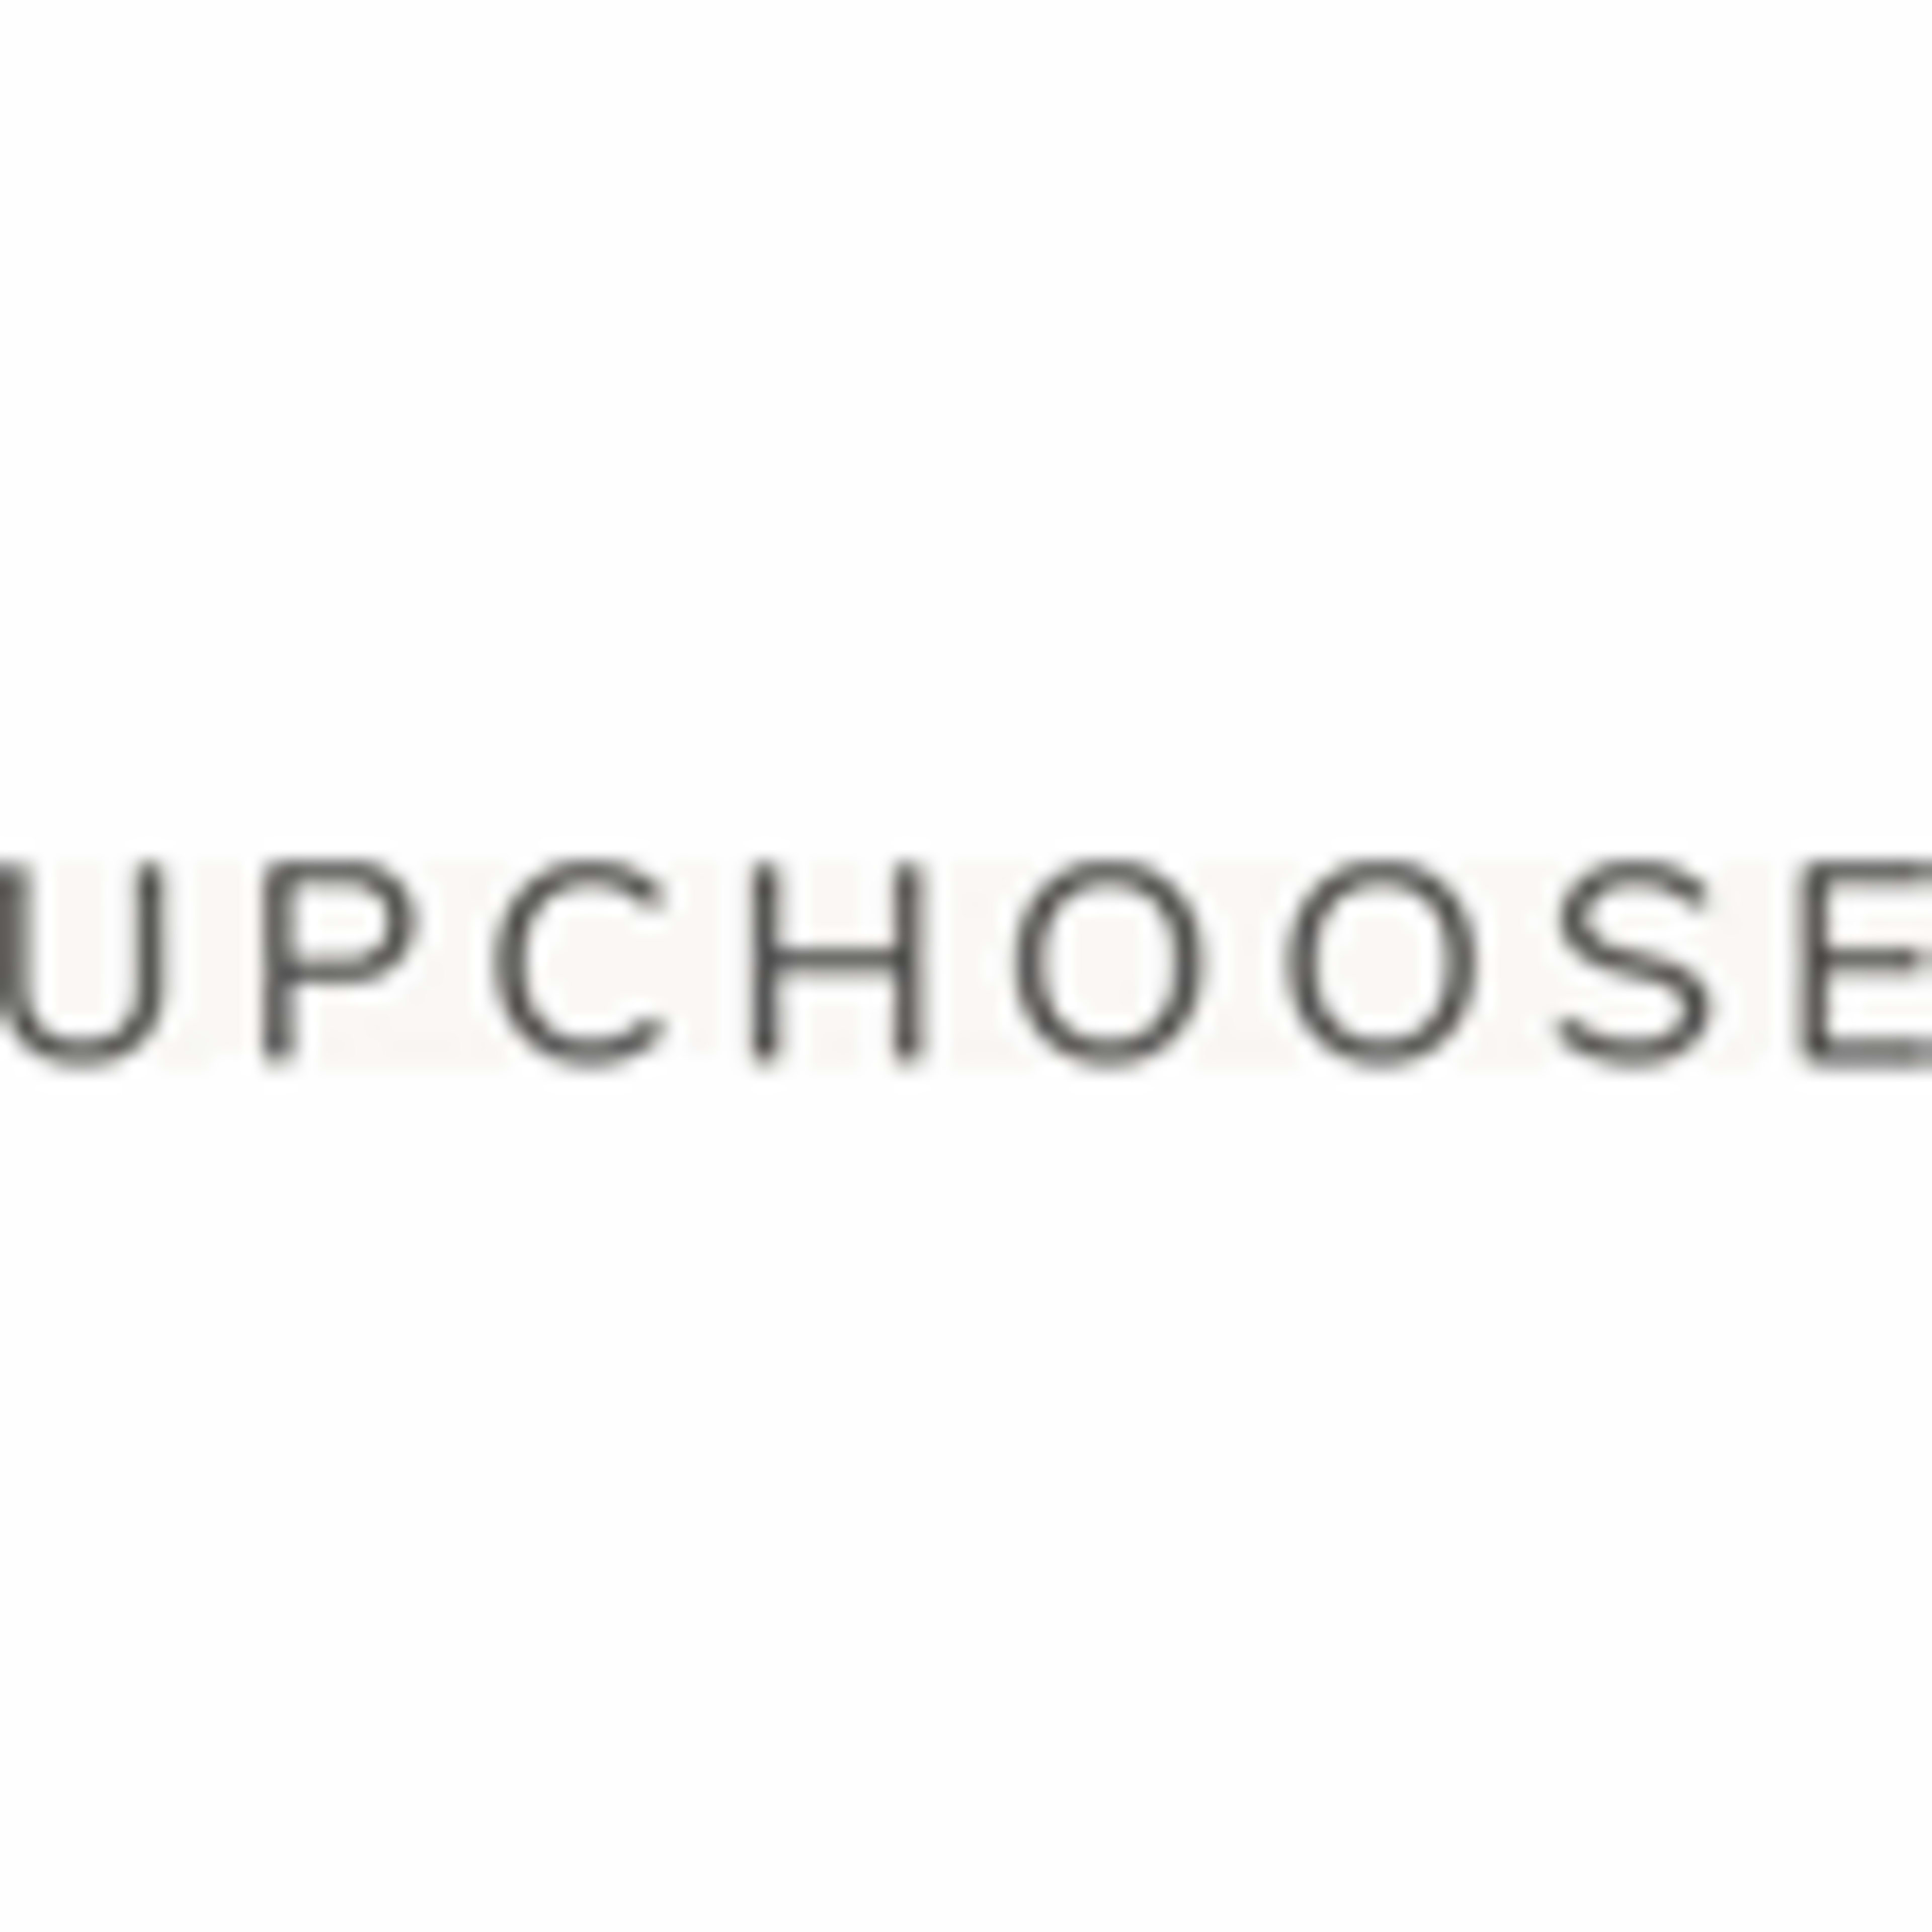 UpChooseCode